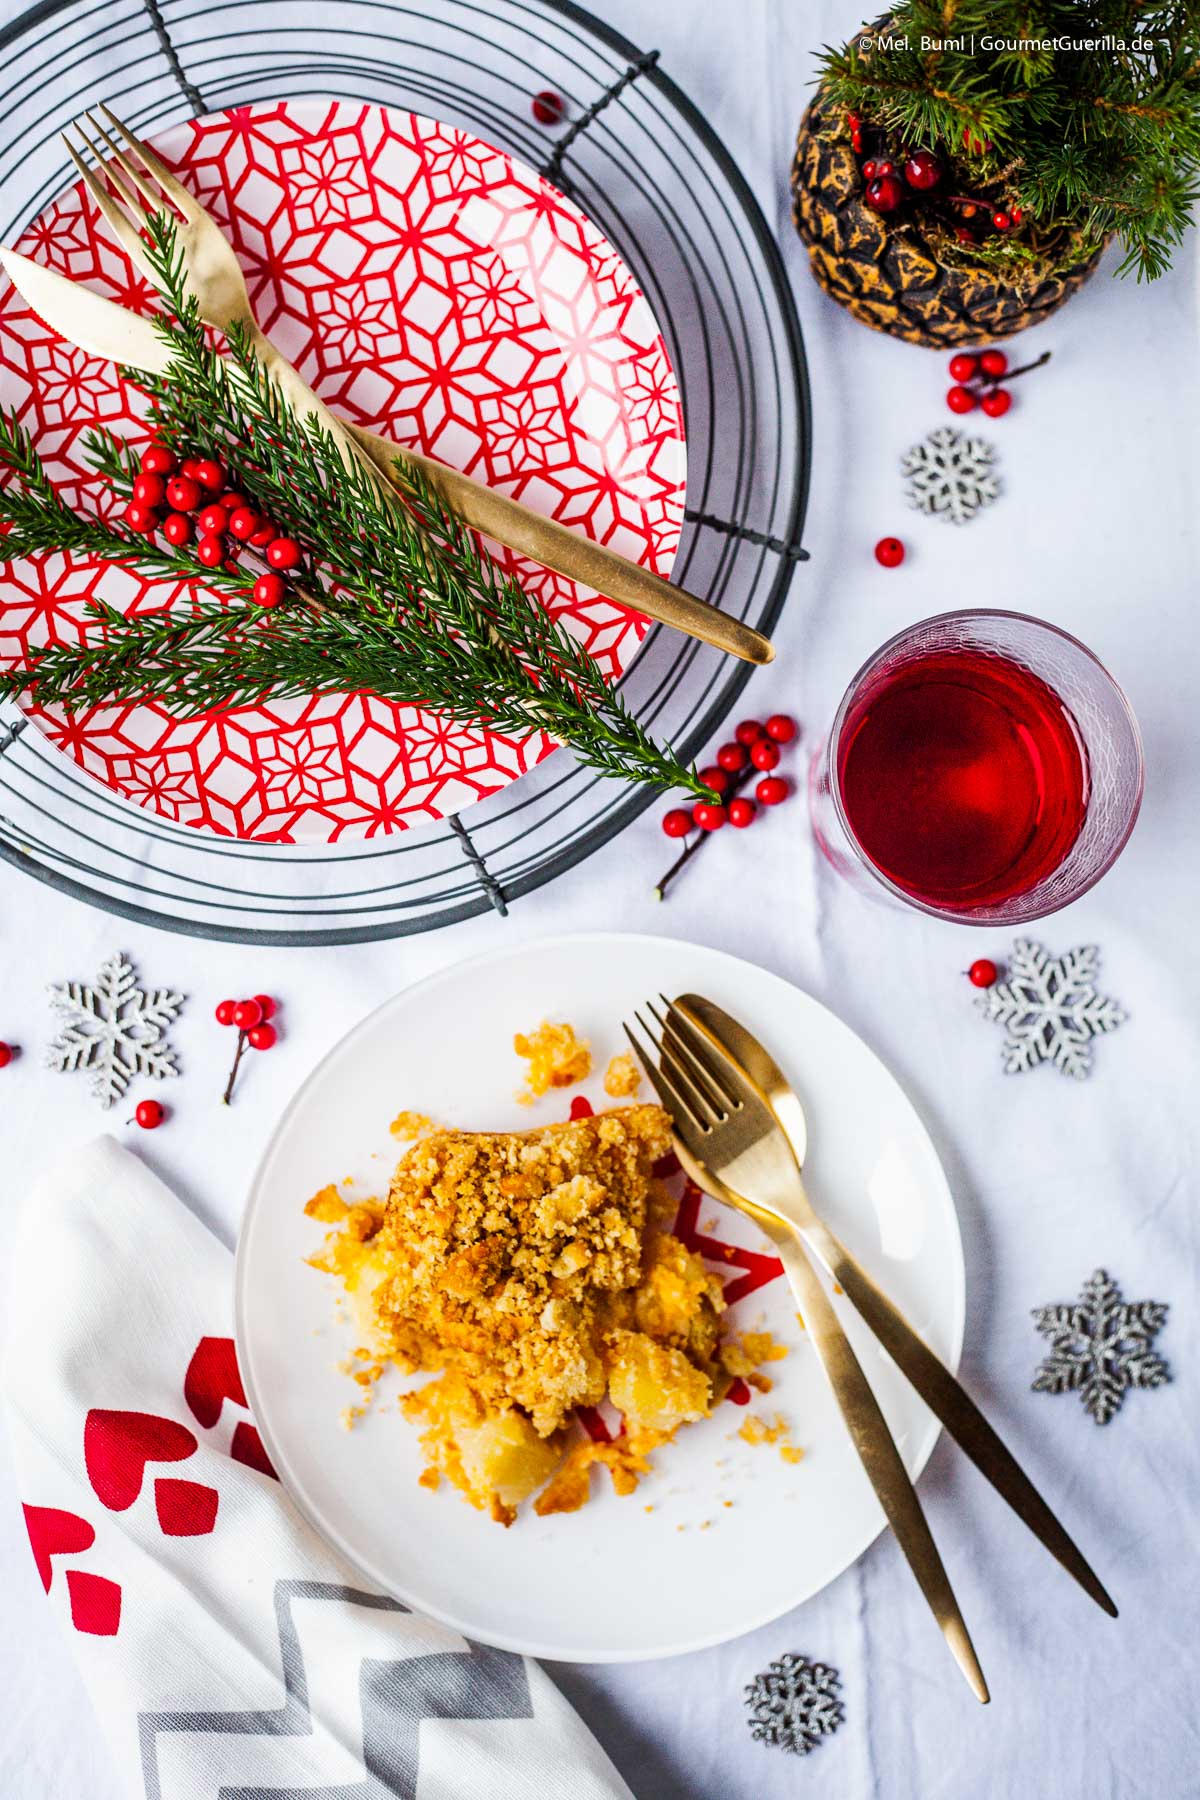 North Carolina Christmas Casserole with Pineapple and Cheddar | GourmetGuerilla.com